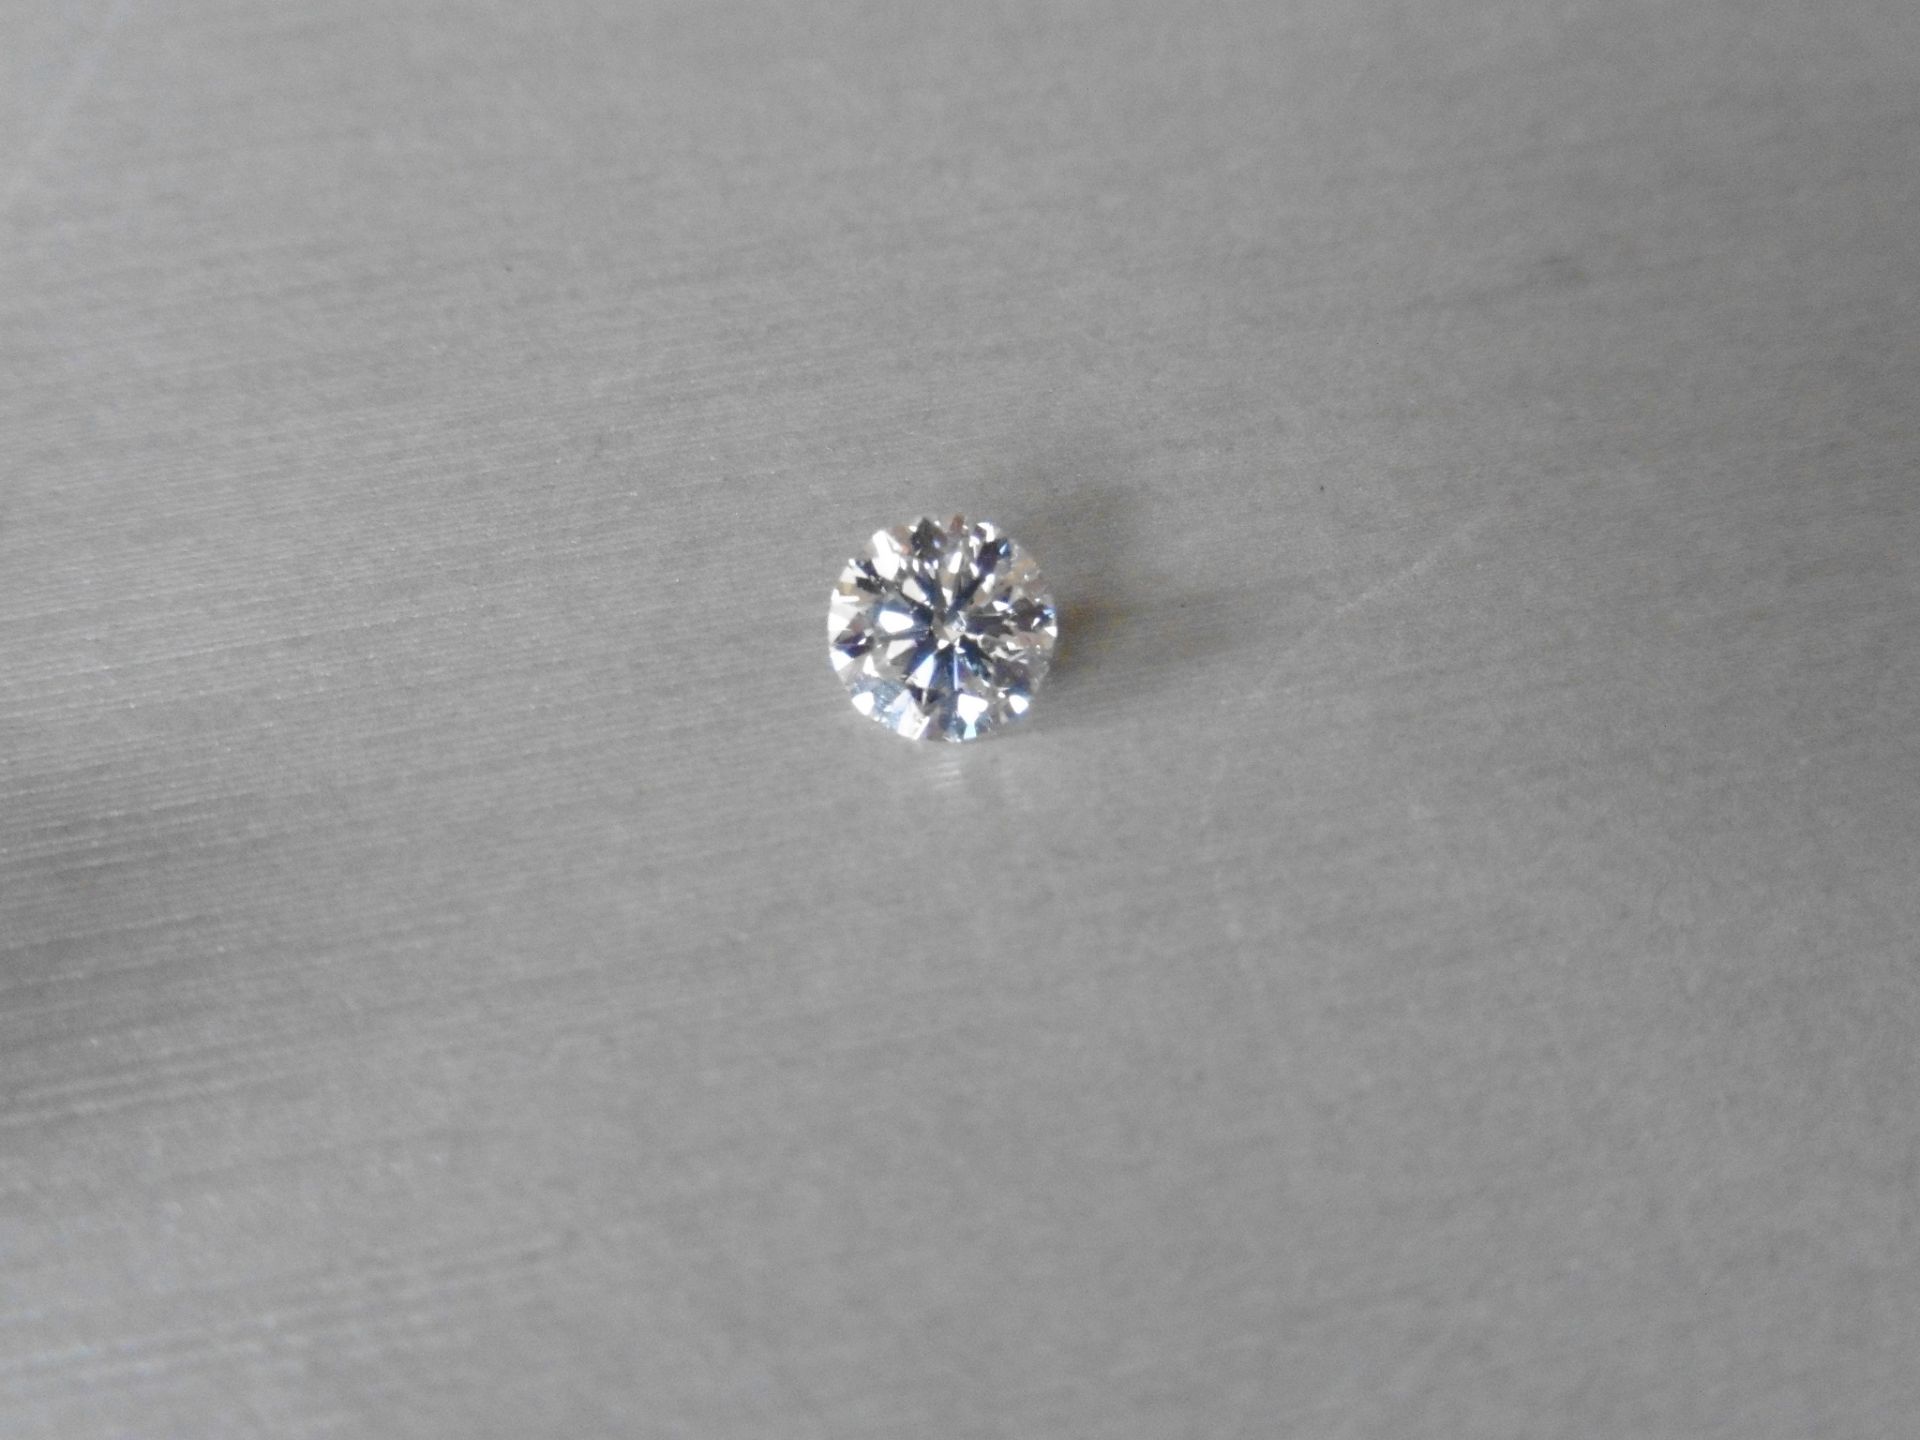 1.06ct single brilliant cut diamond, H colour SI1 clarity. 6.51mm x 6.55mm x 4.05mm. Suitable for